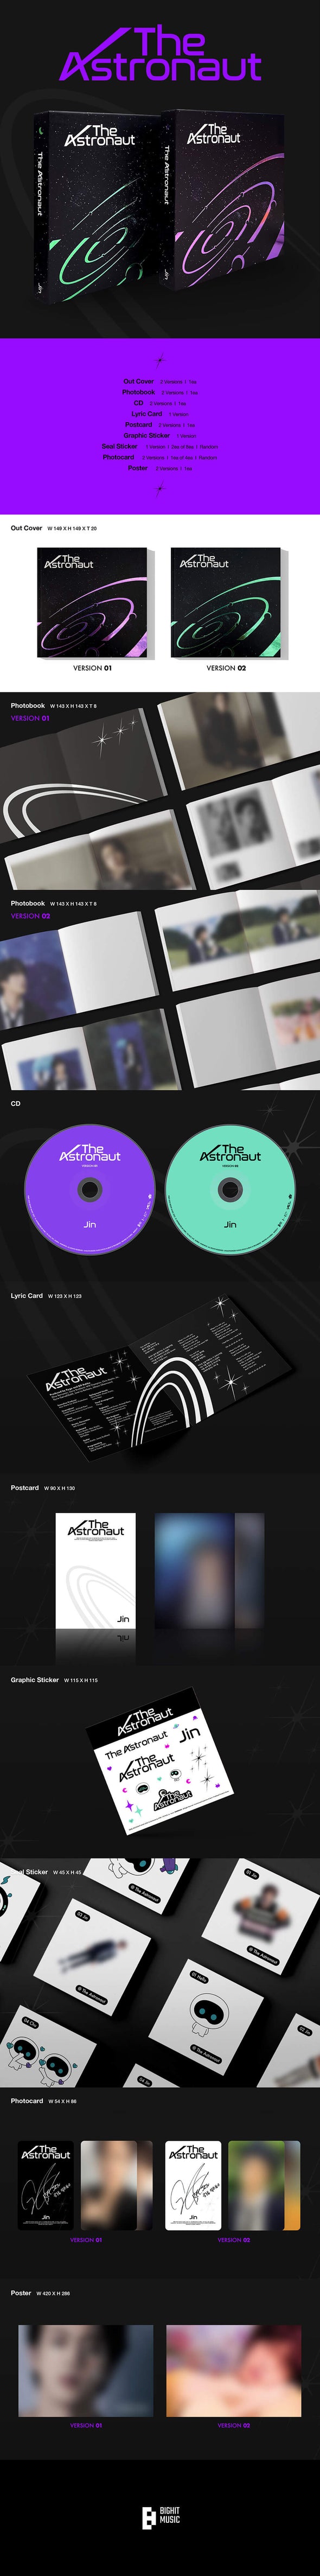 JIN (BTS) - 'The Astronaut' Album